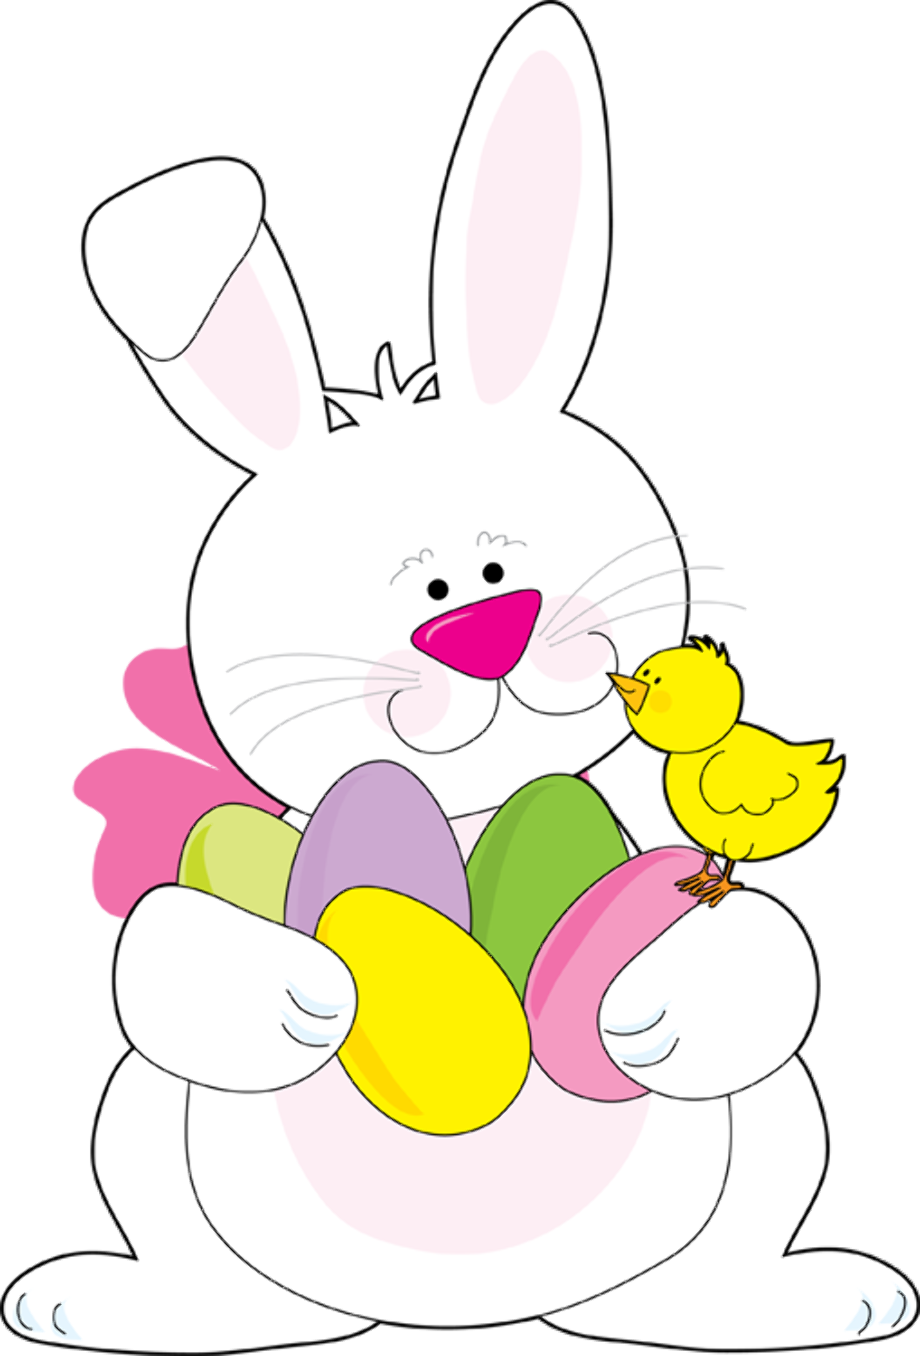 Easter bunny cartoon